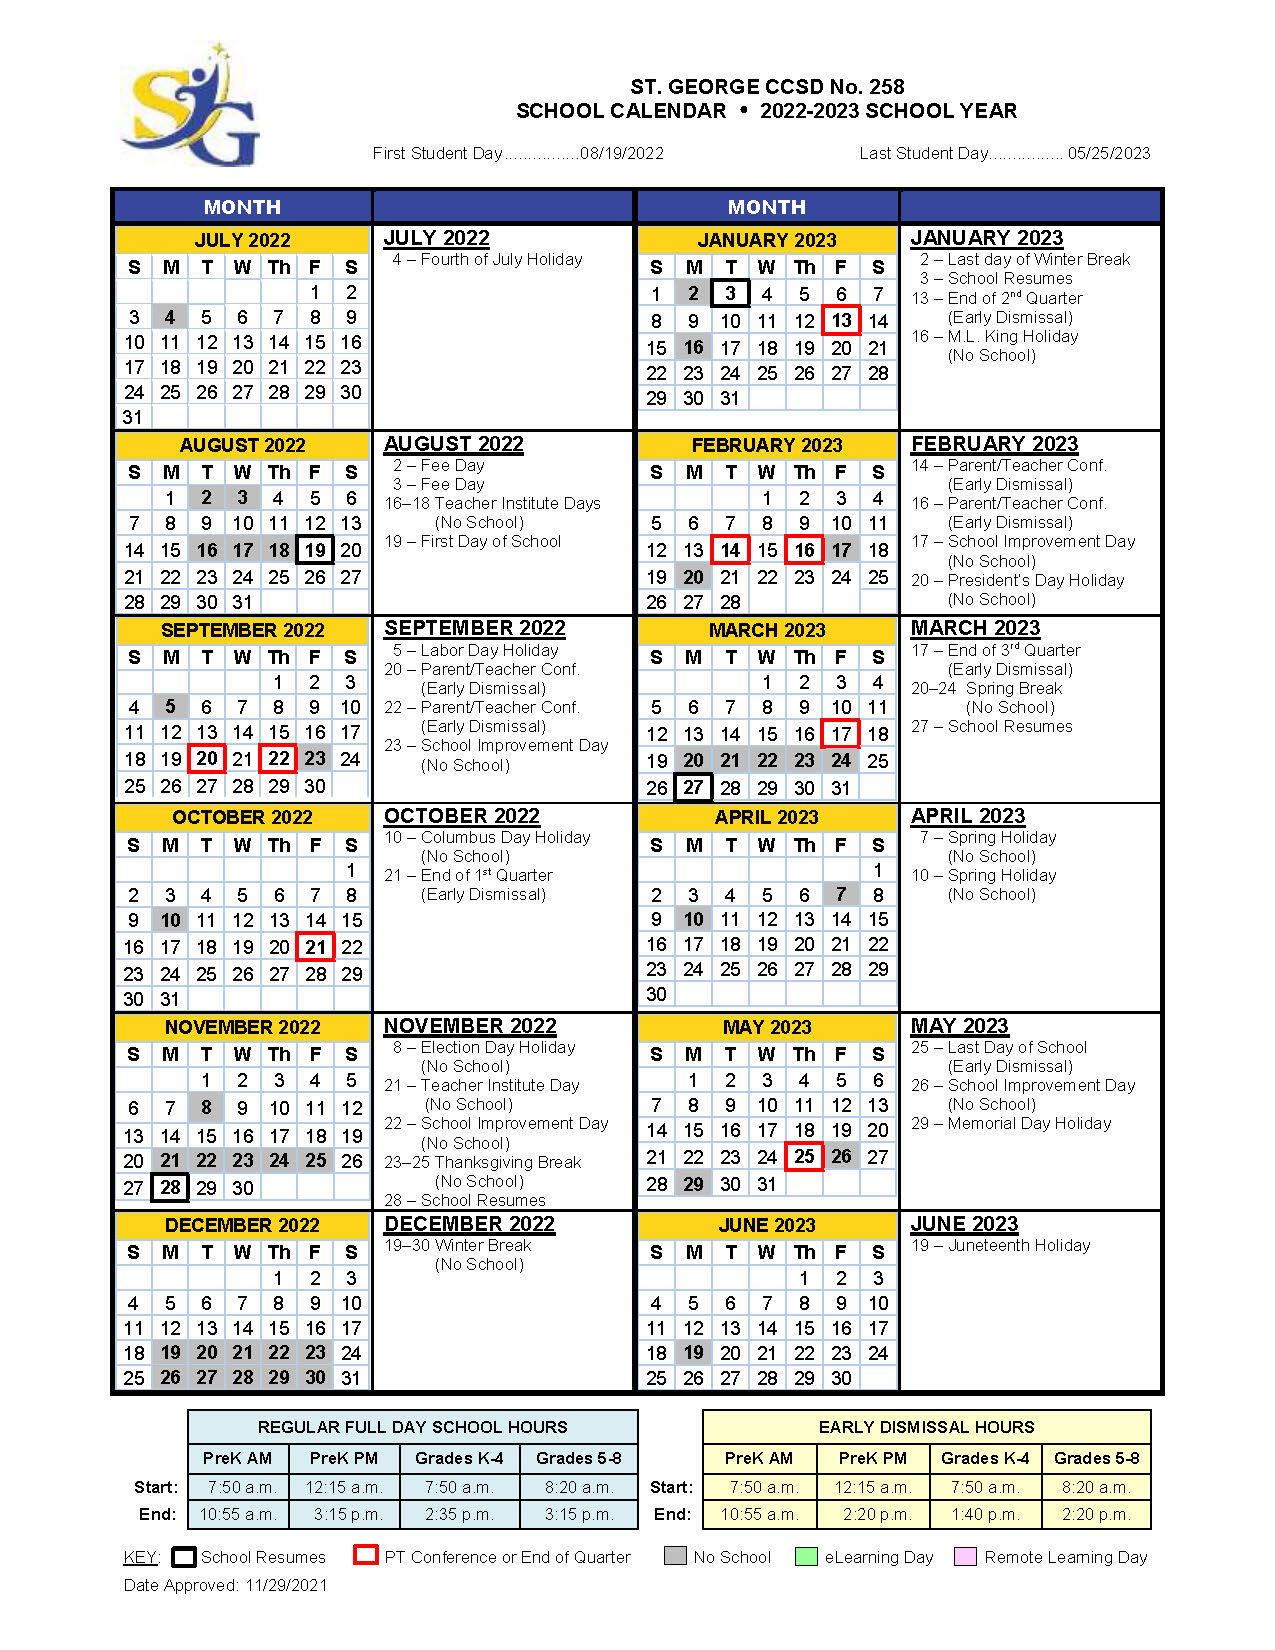 District Calendar 2022-2023